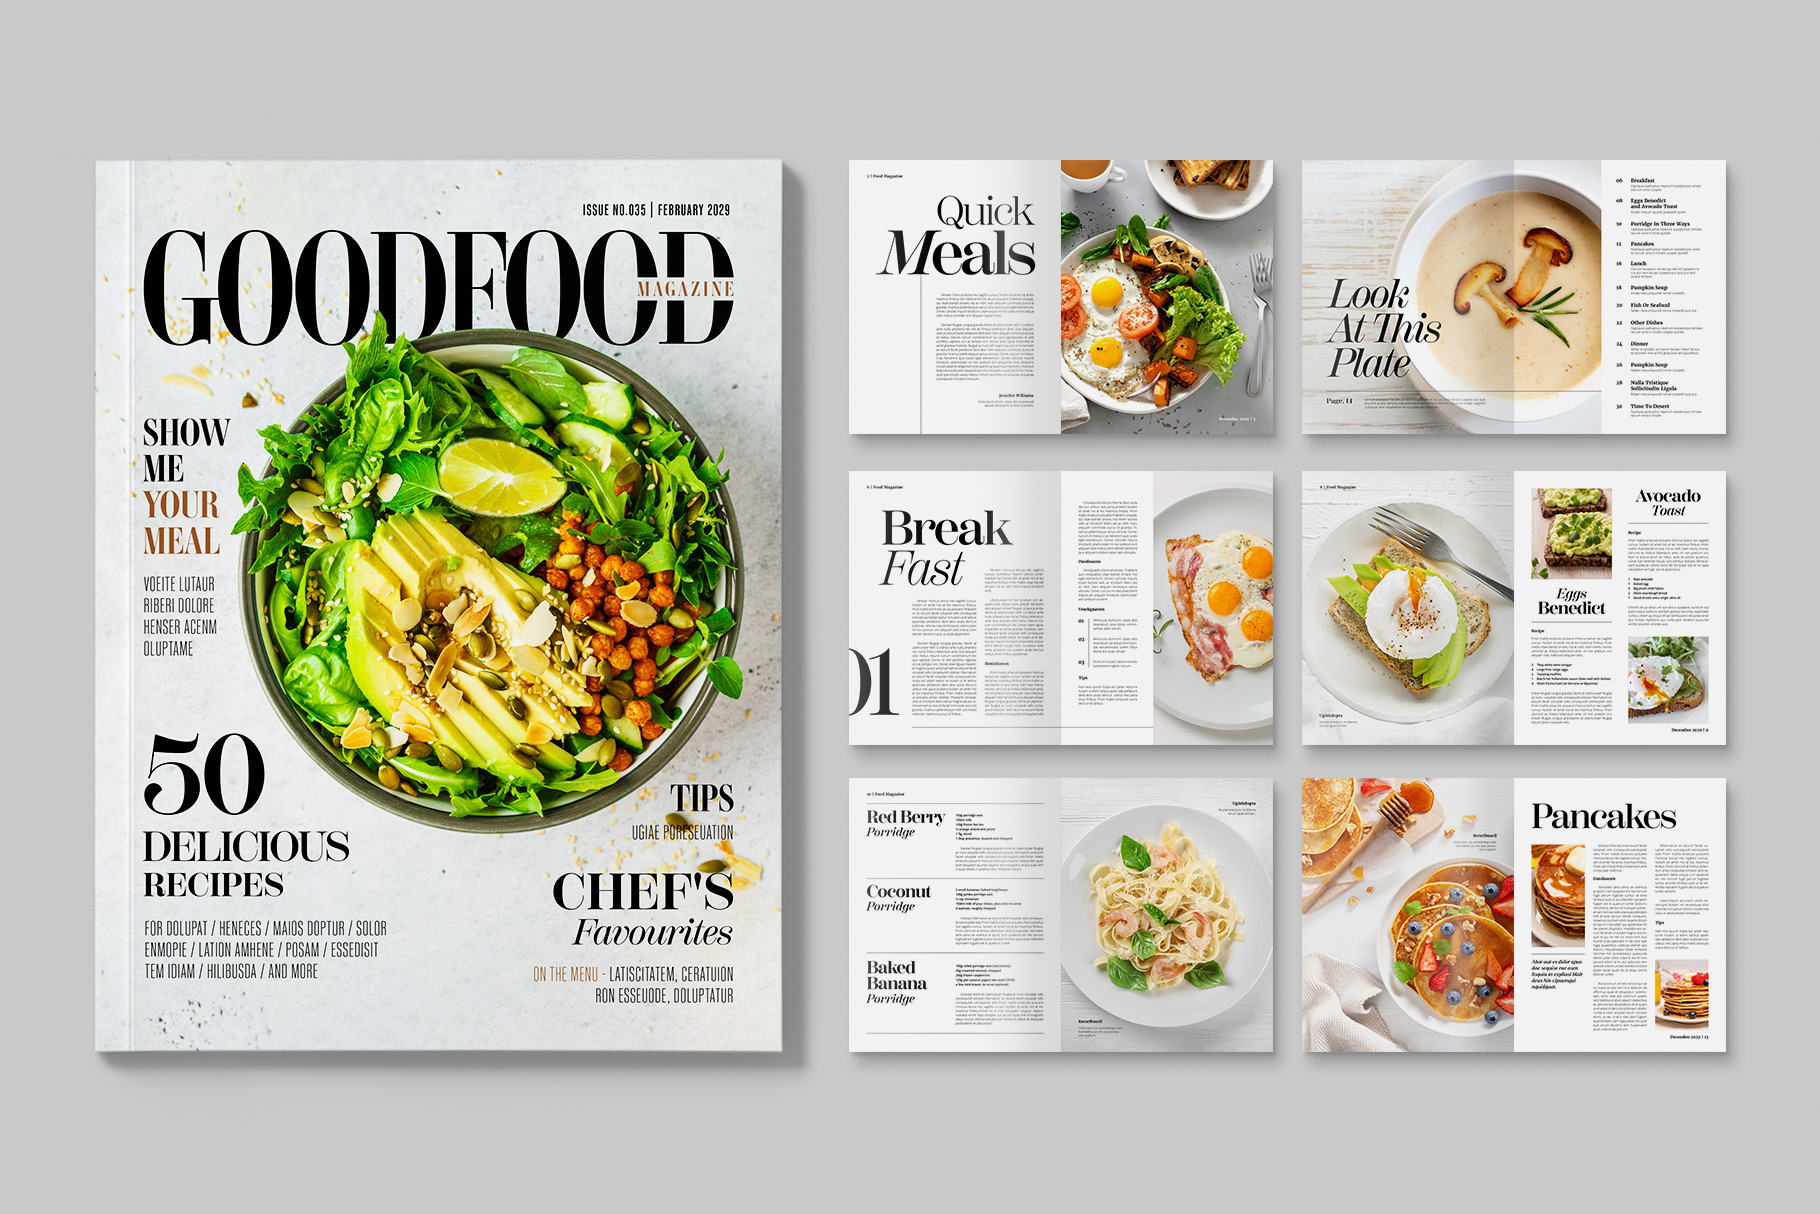 Food Magazine Template (PSD Format)